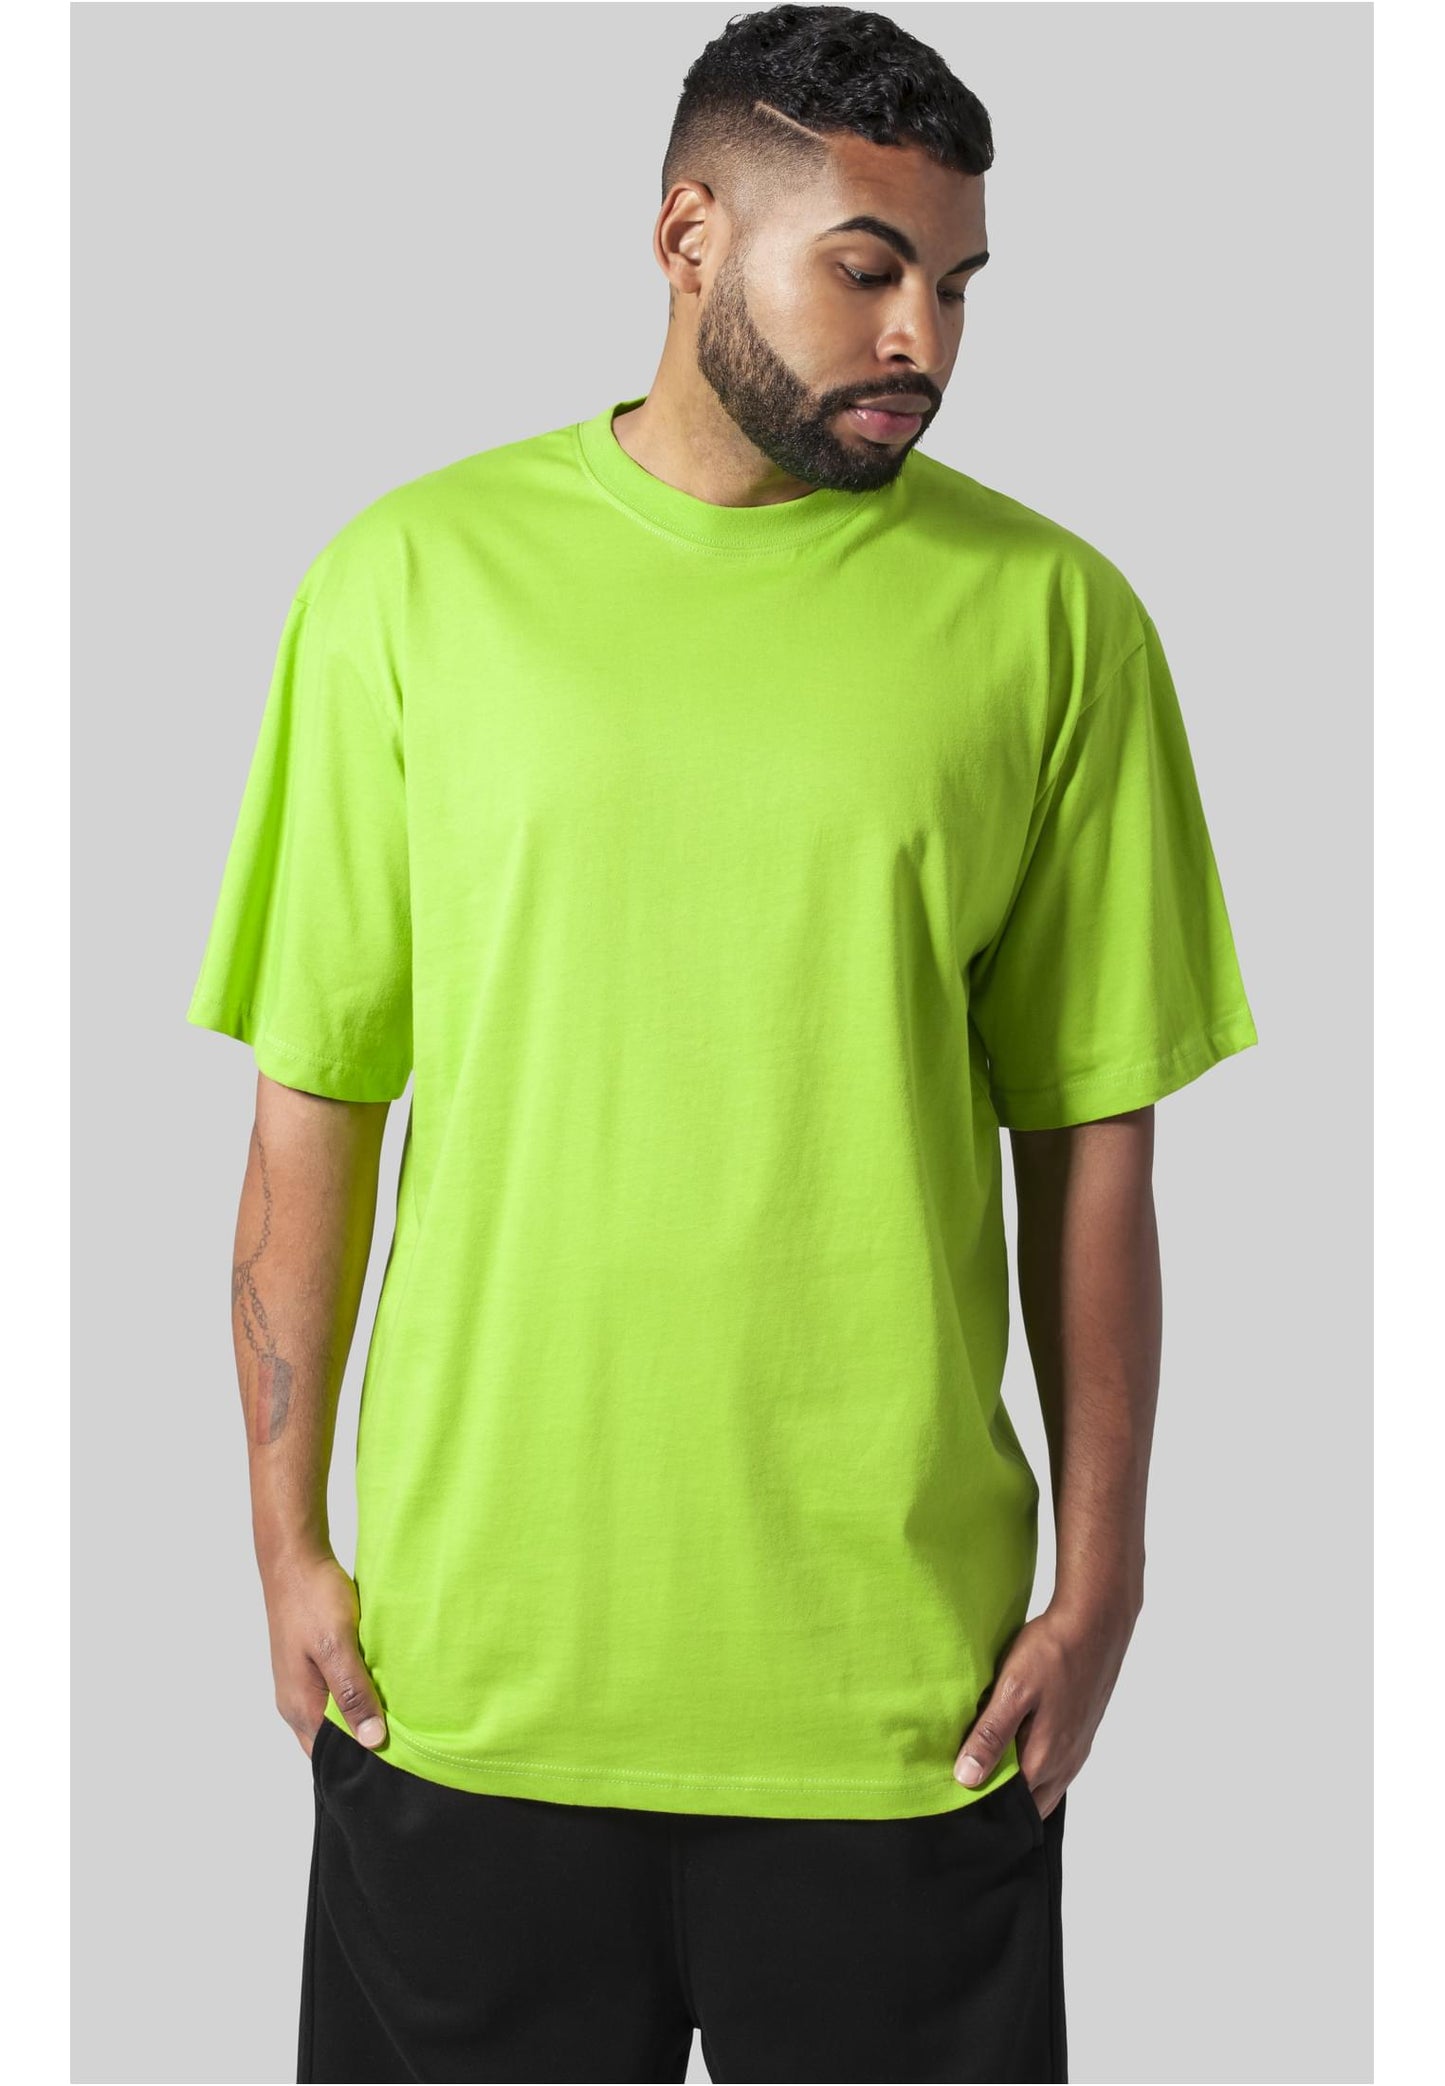 Urban Classics Tall T-Shirt Baggy / Loose Fit in Limegreen